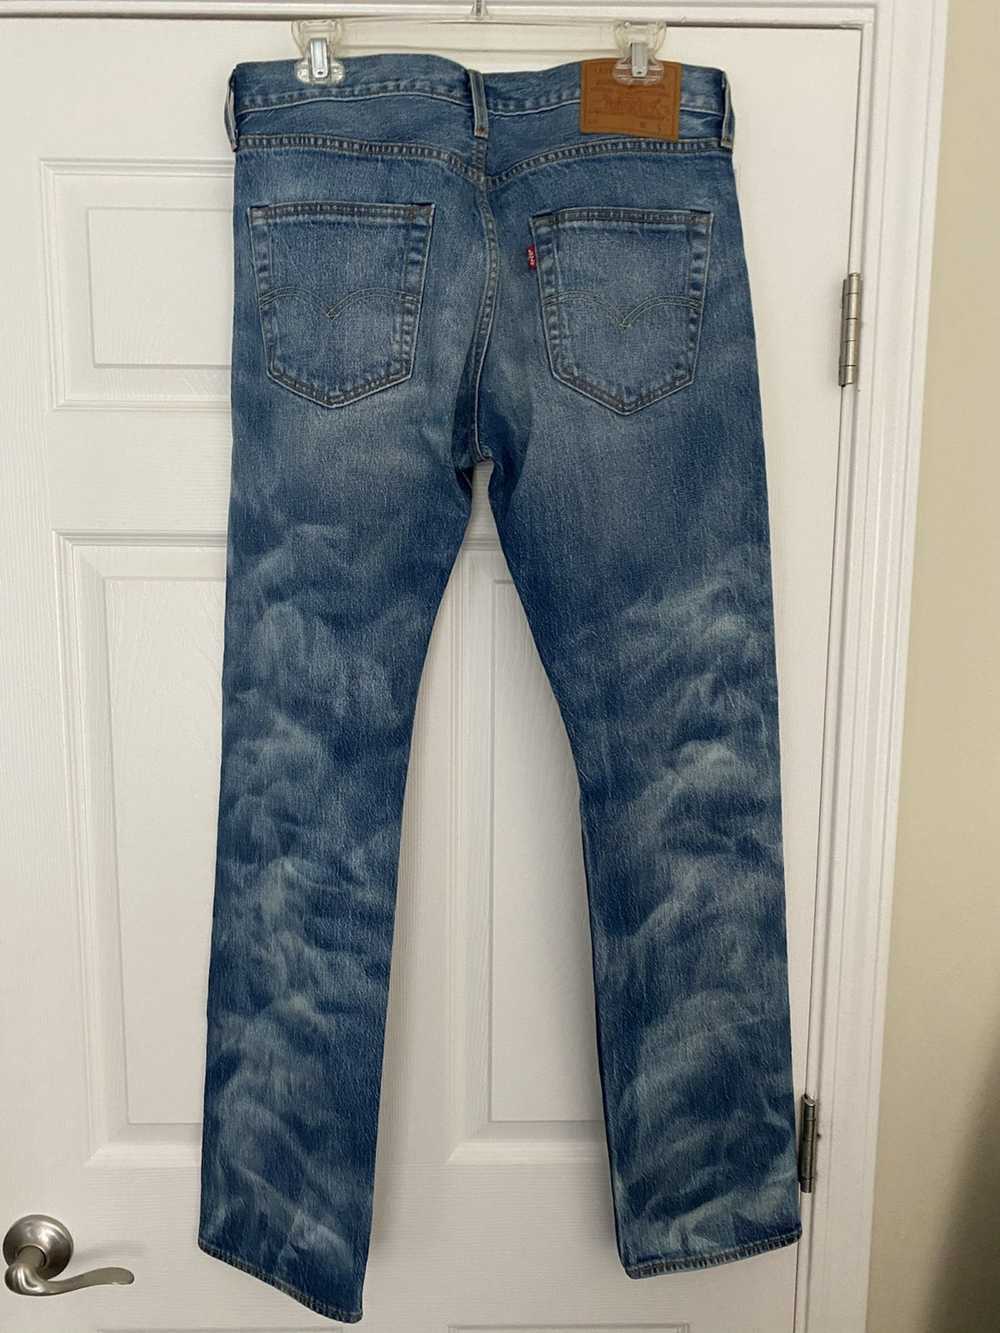 Levi's Sample Light Wash Jeans - image 2